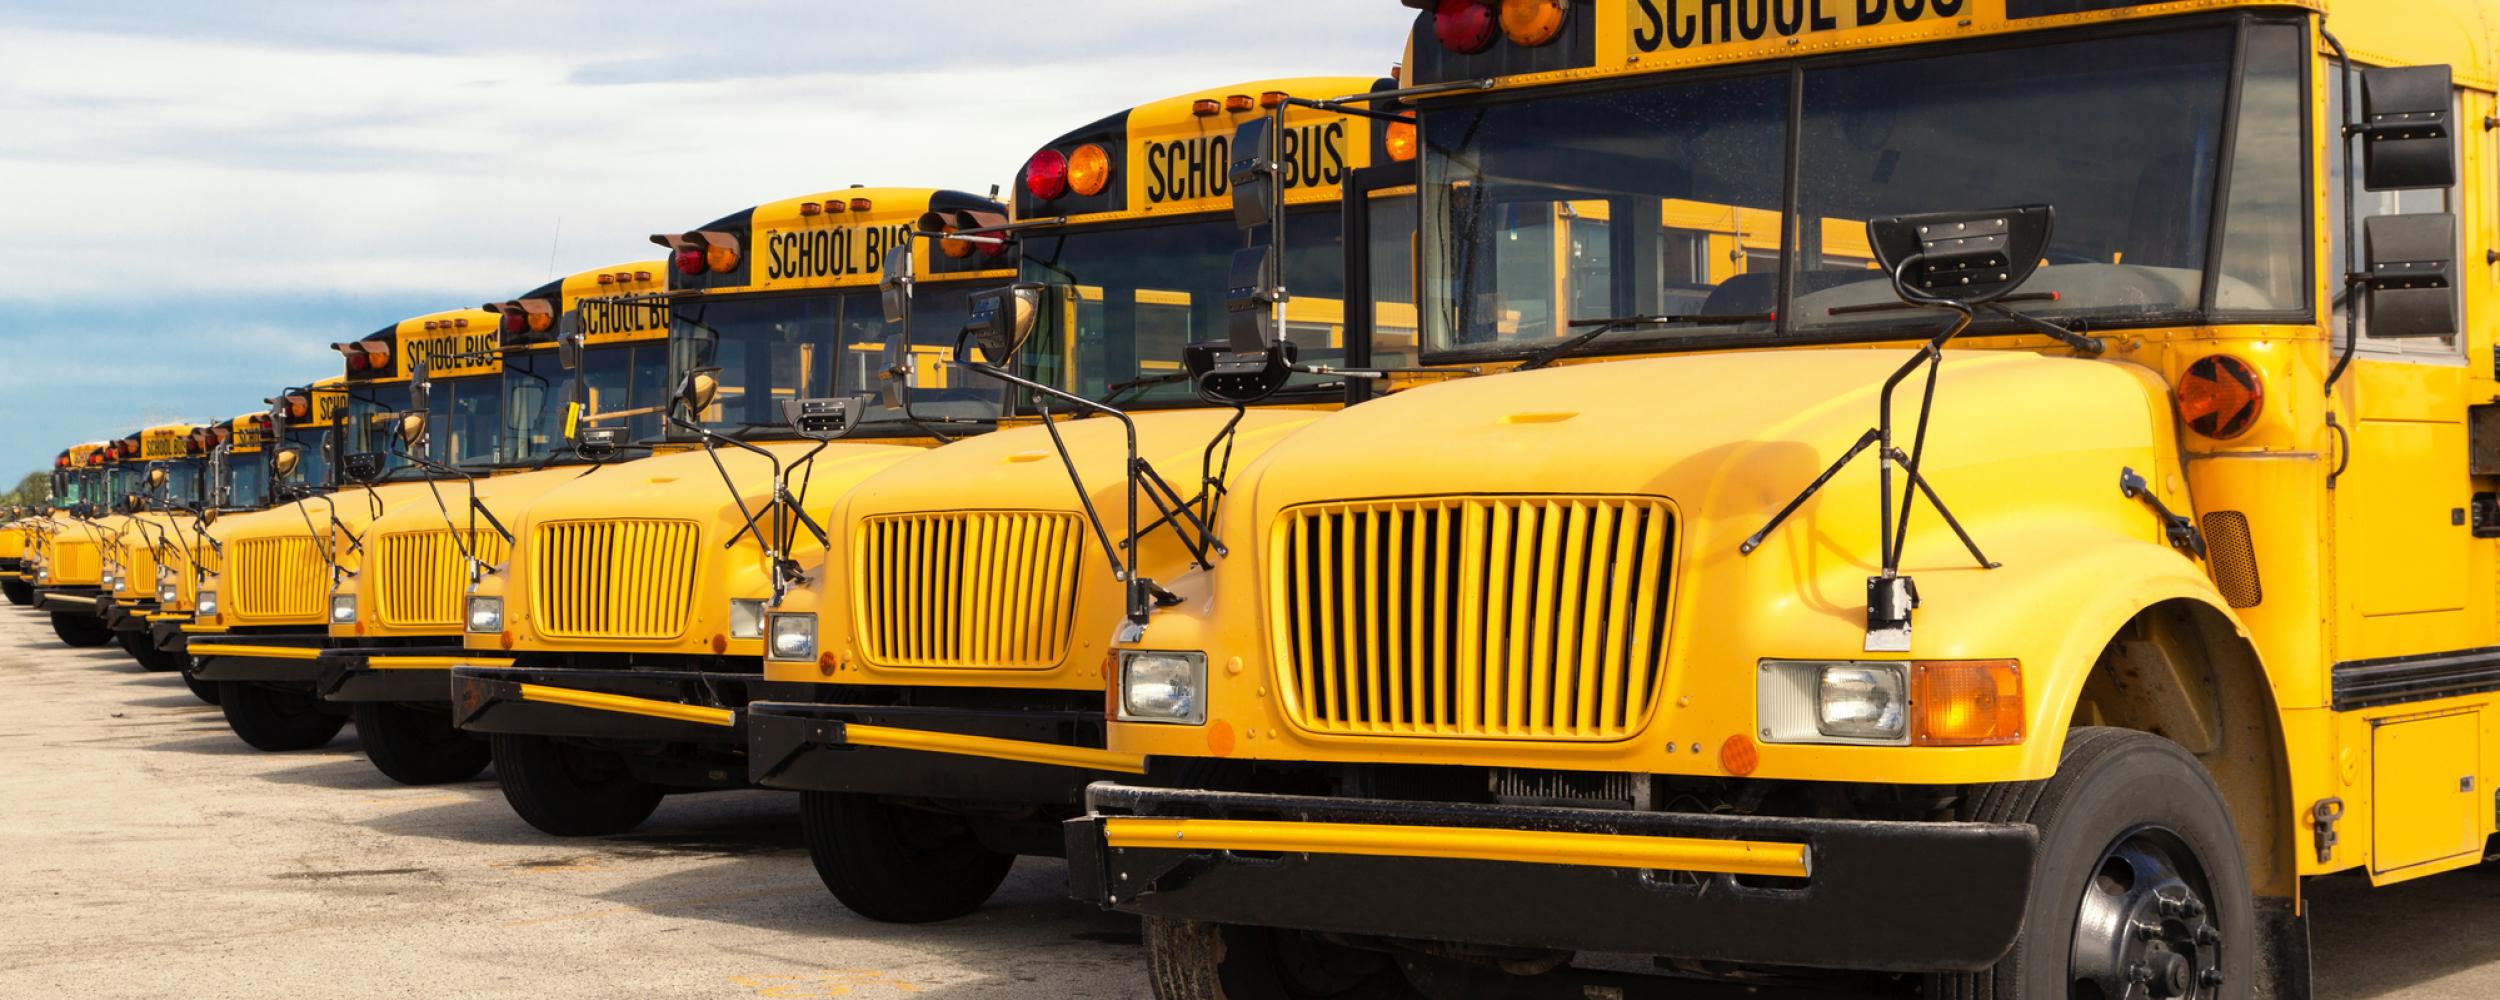 LISD School Buses